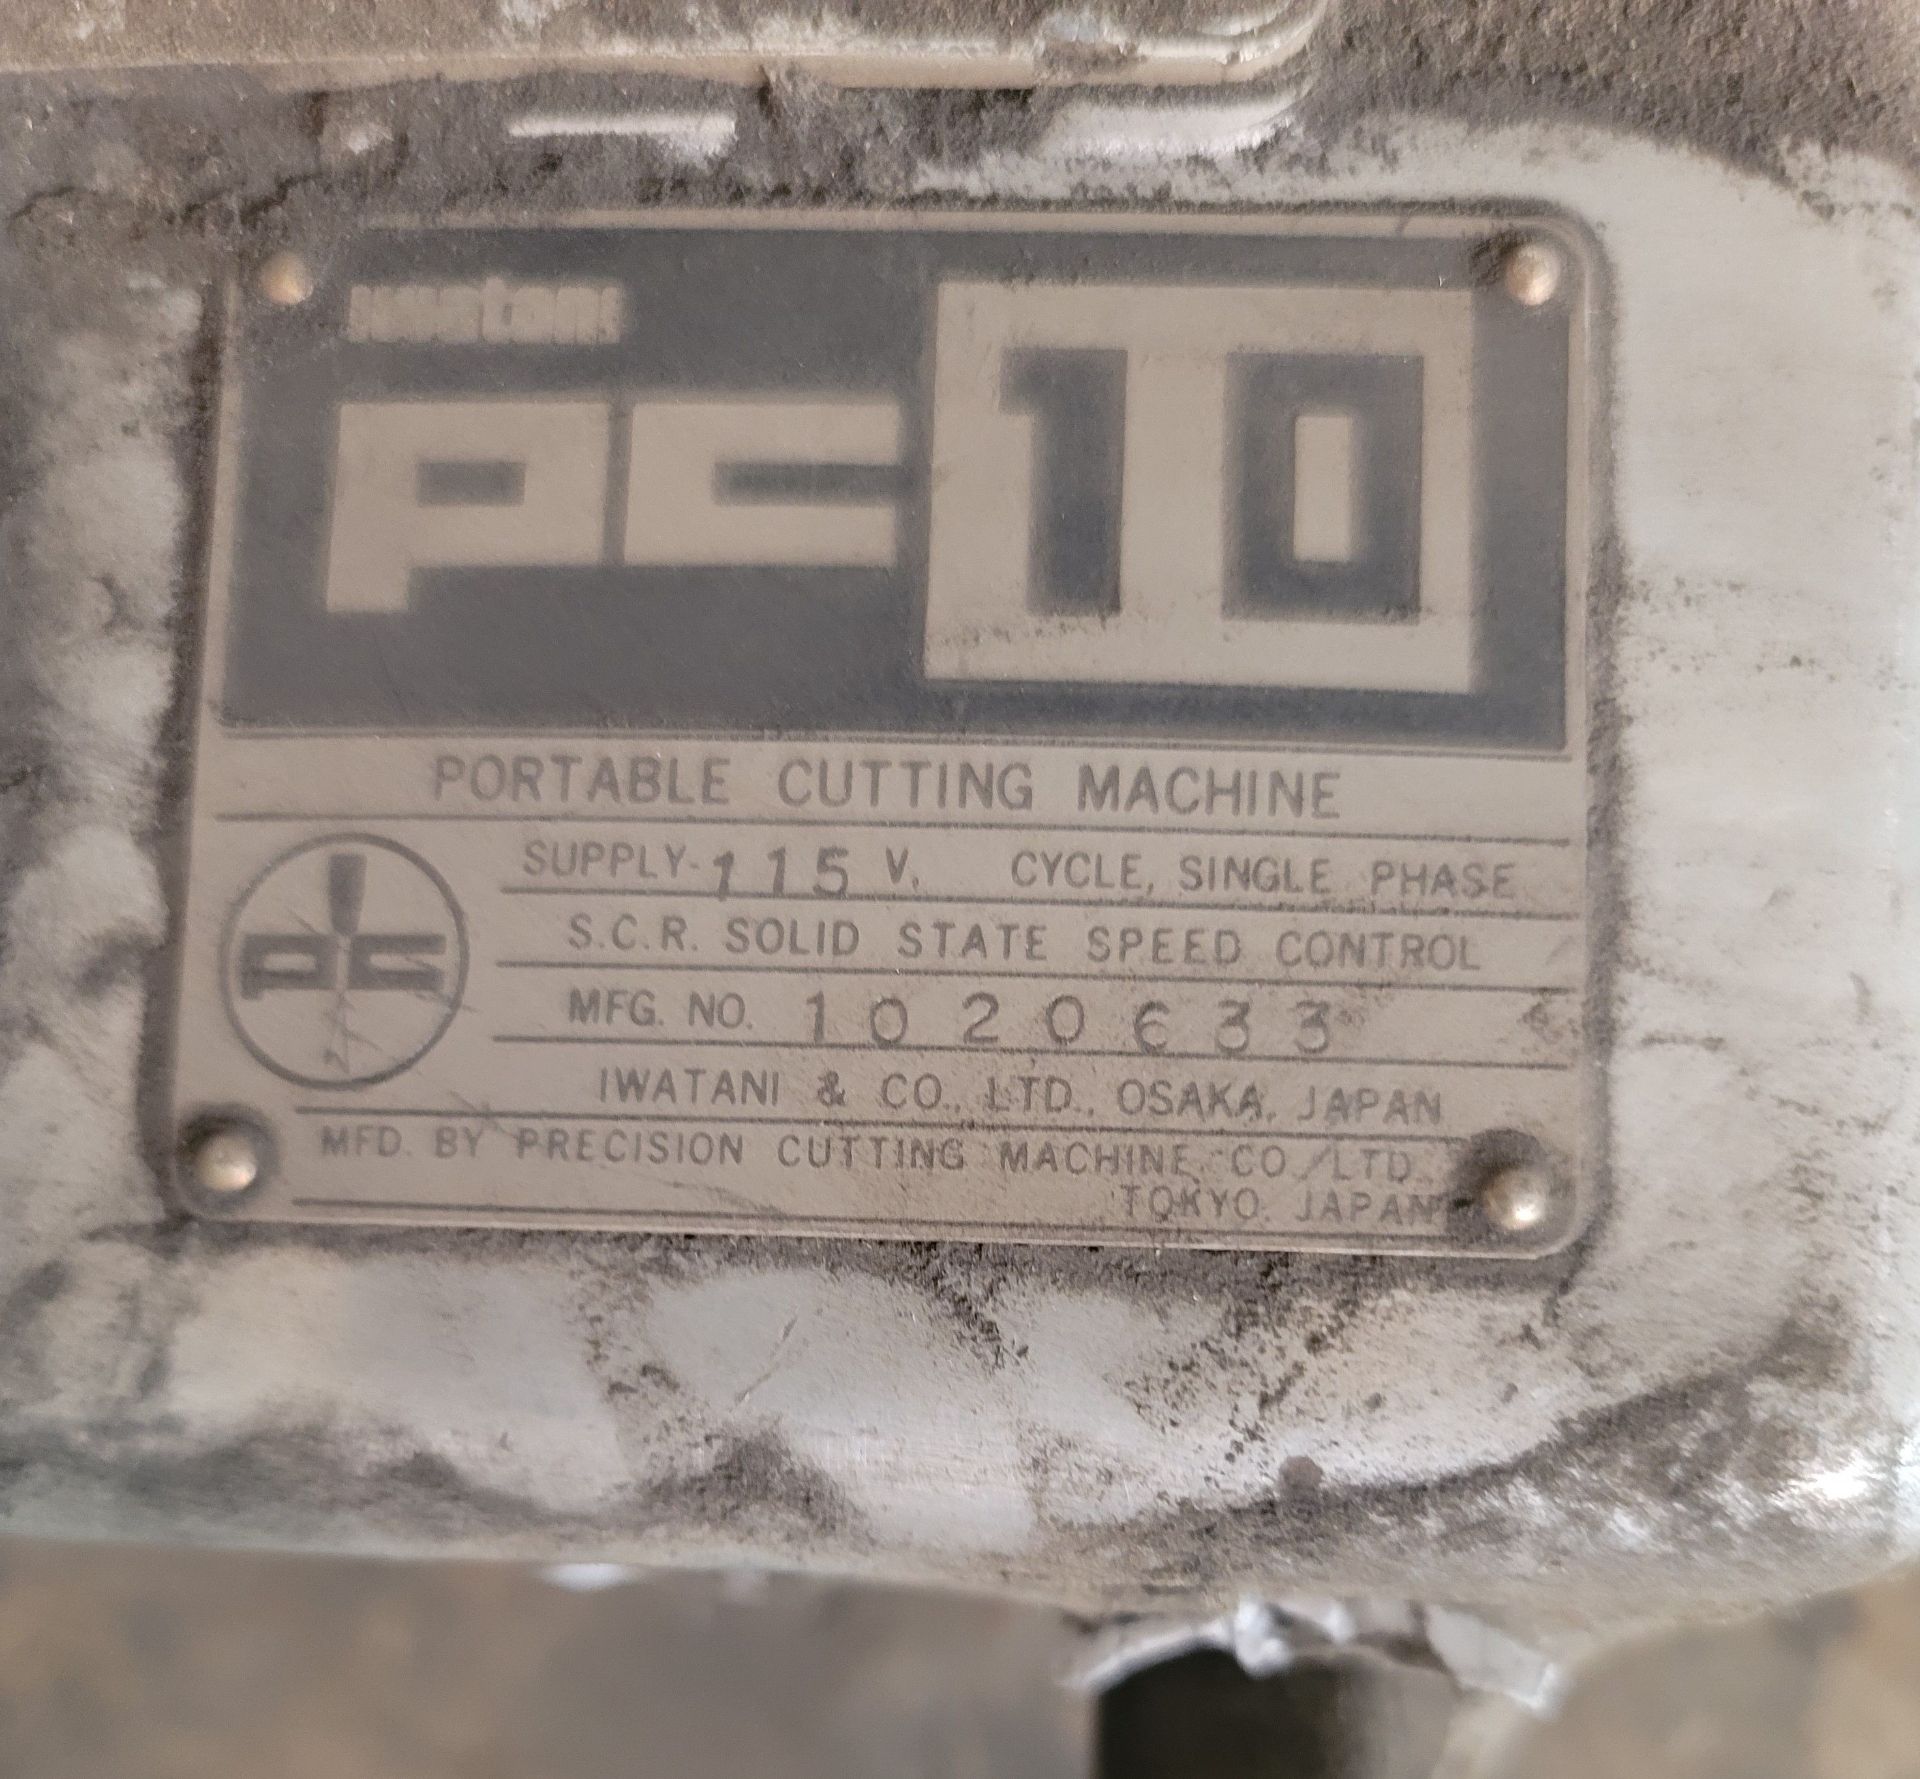 PC10 TRACK TORCH, NO TRACK, NO CORD - Image 2 of 2